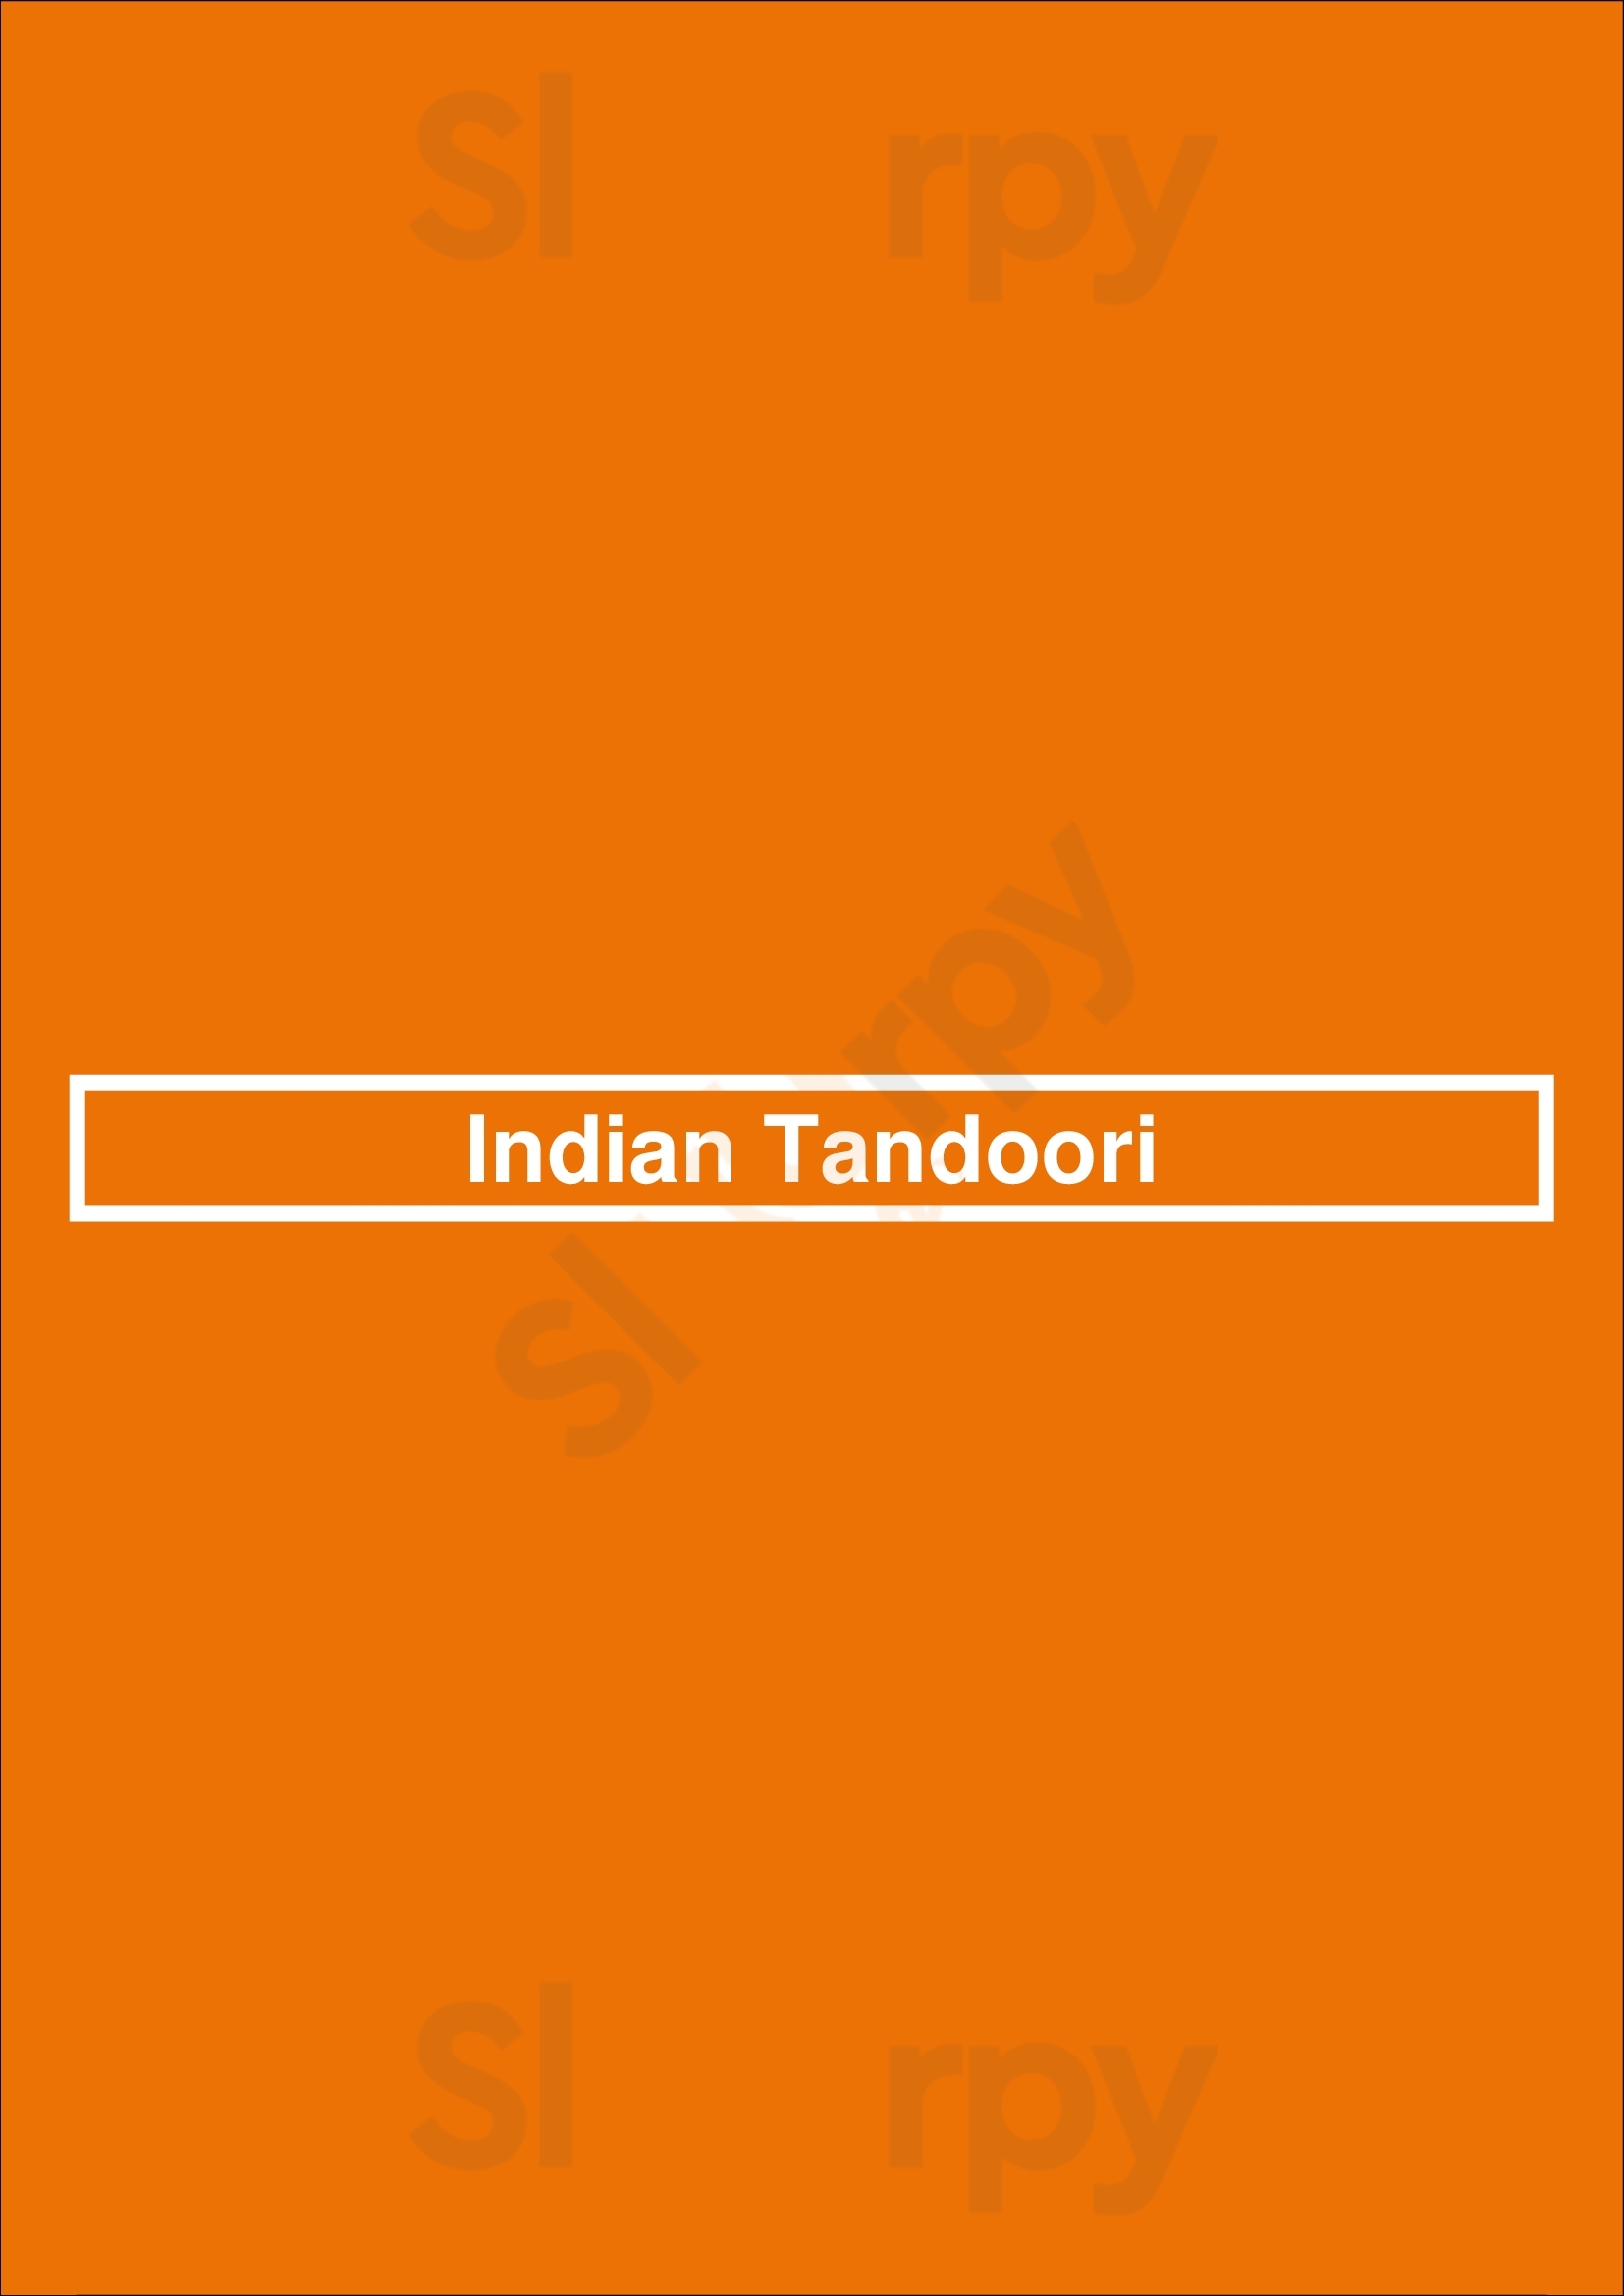 Indian Tandoori Den Bosch Menu - 1